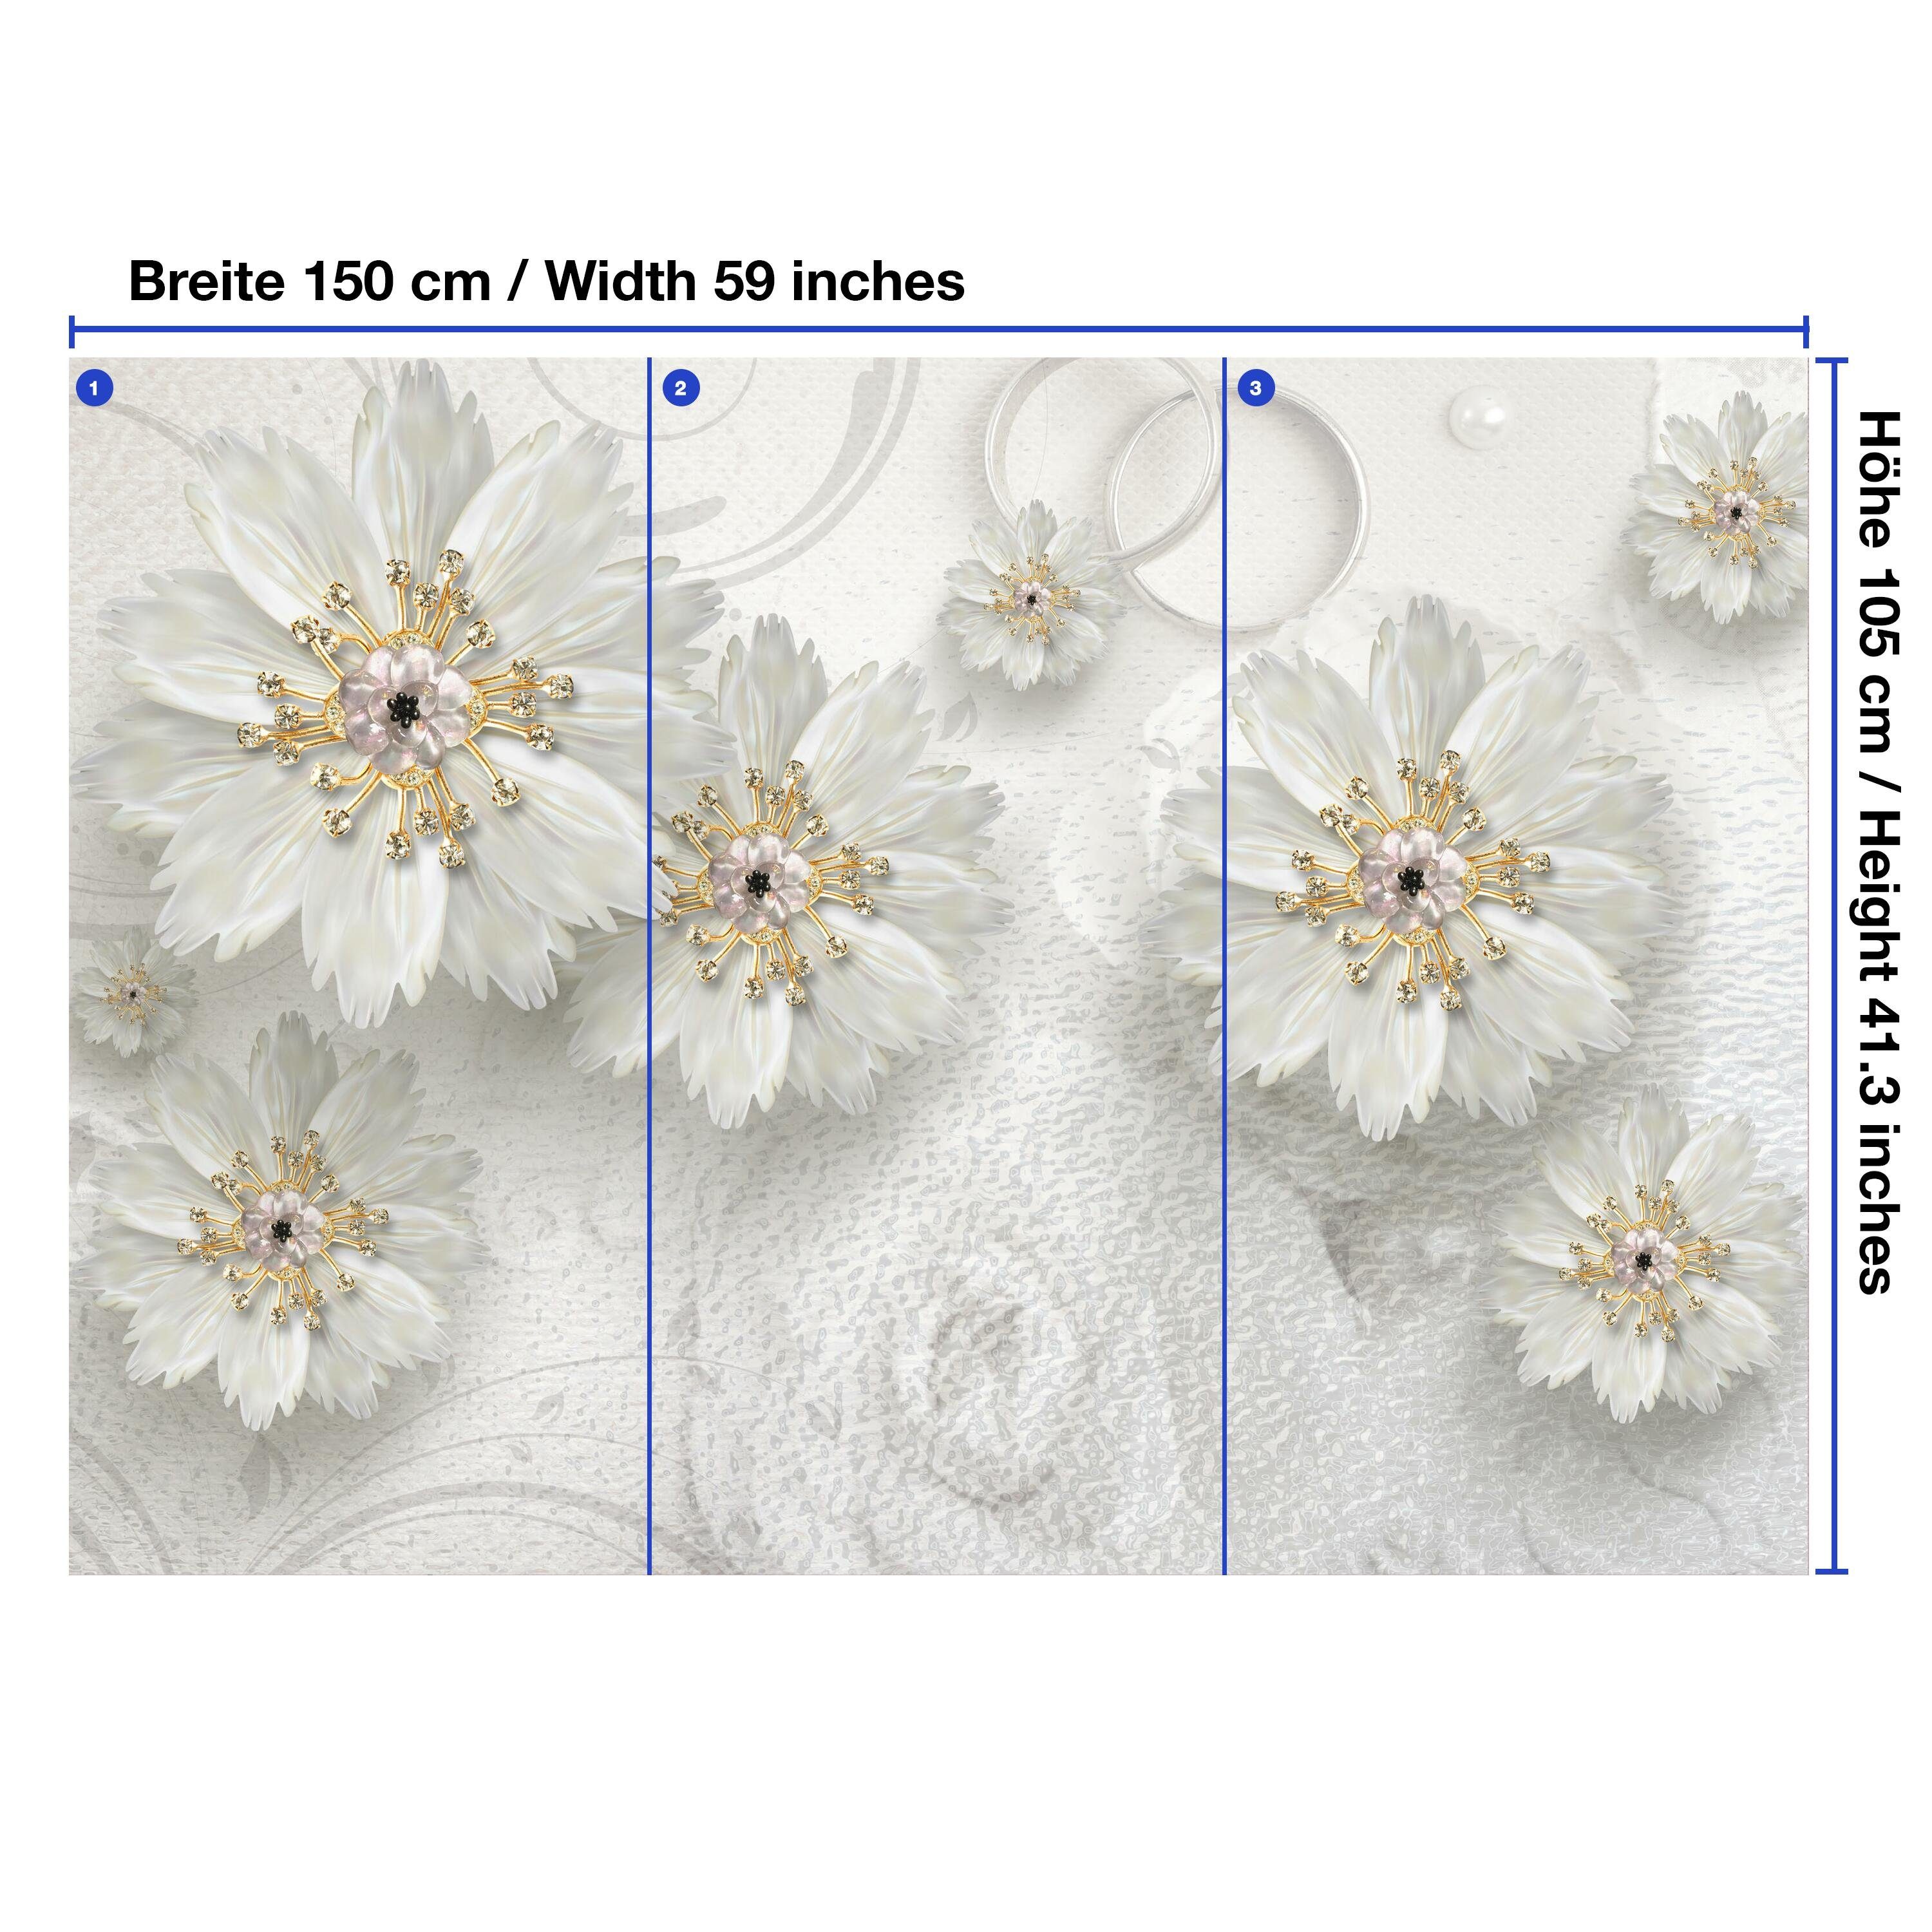 Fototapete matt, wandmotiv24 weiße Ornamente 3D Motivtapete, Vliestapete Wandtapete, Effekt, Blüten glatt,